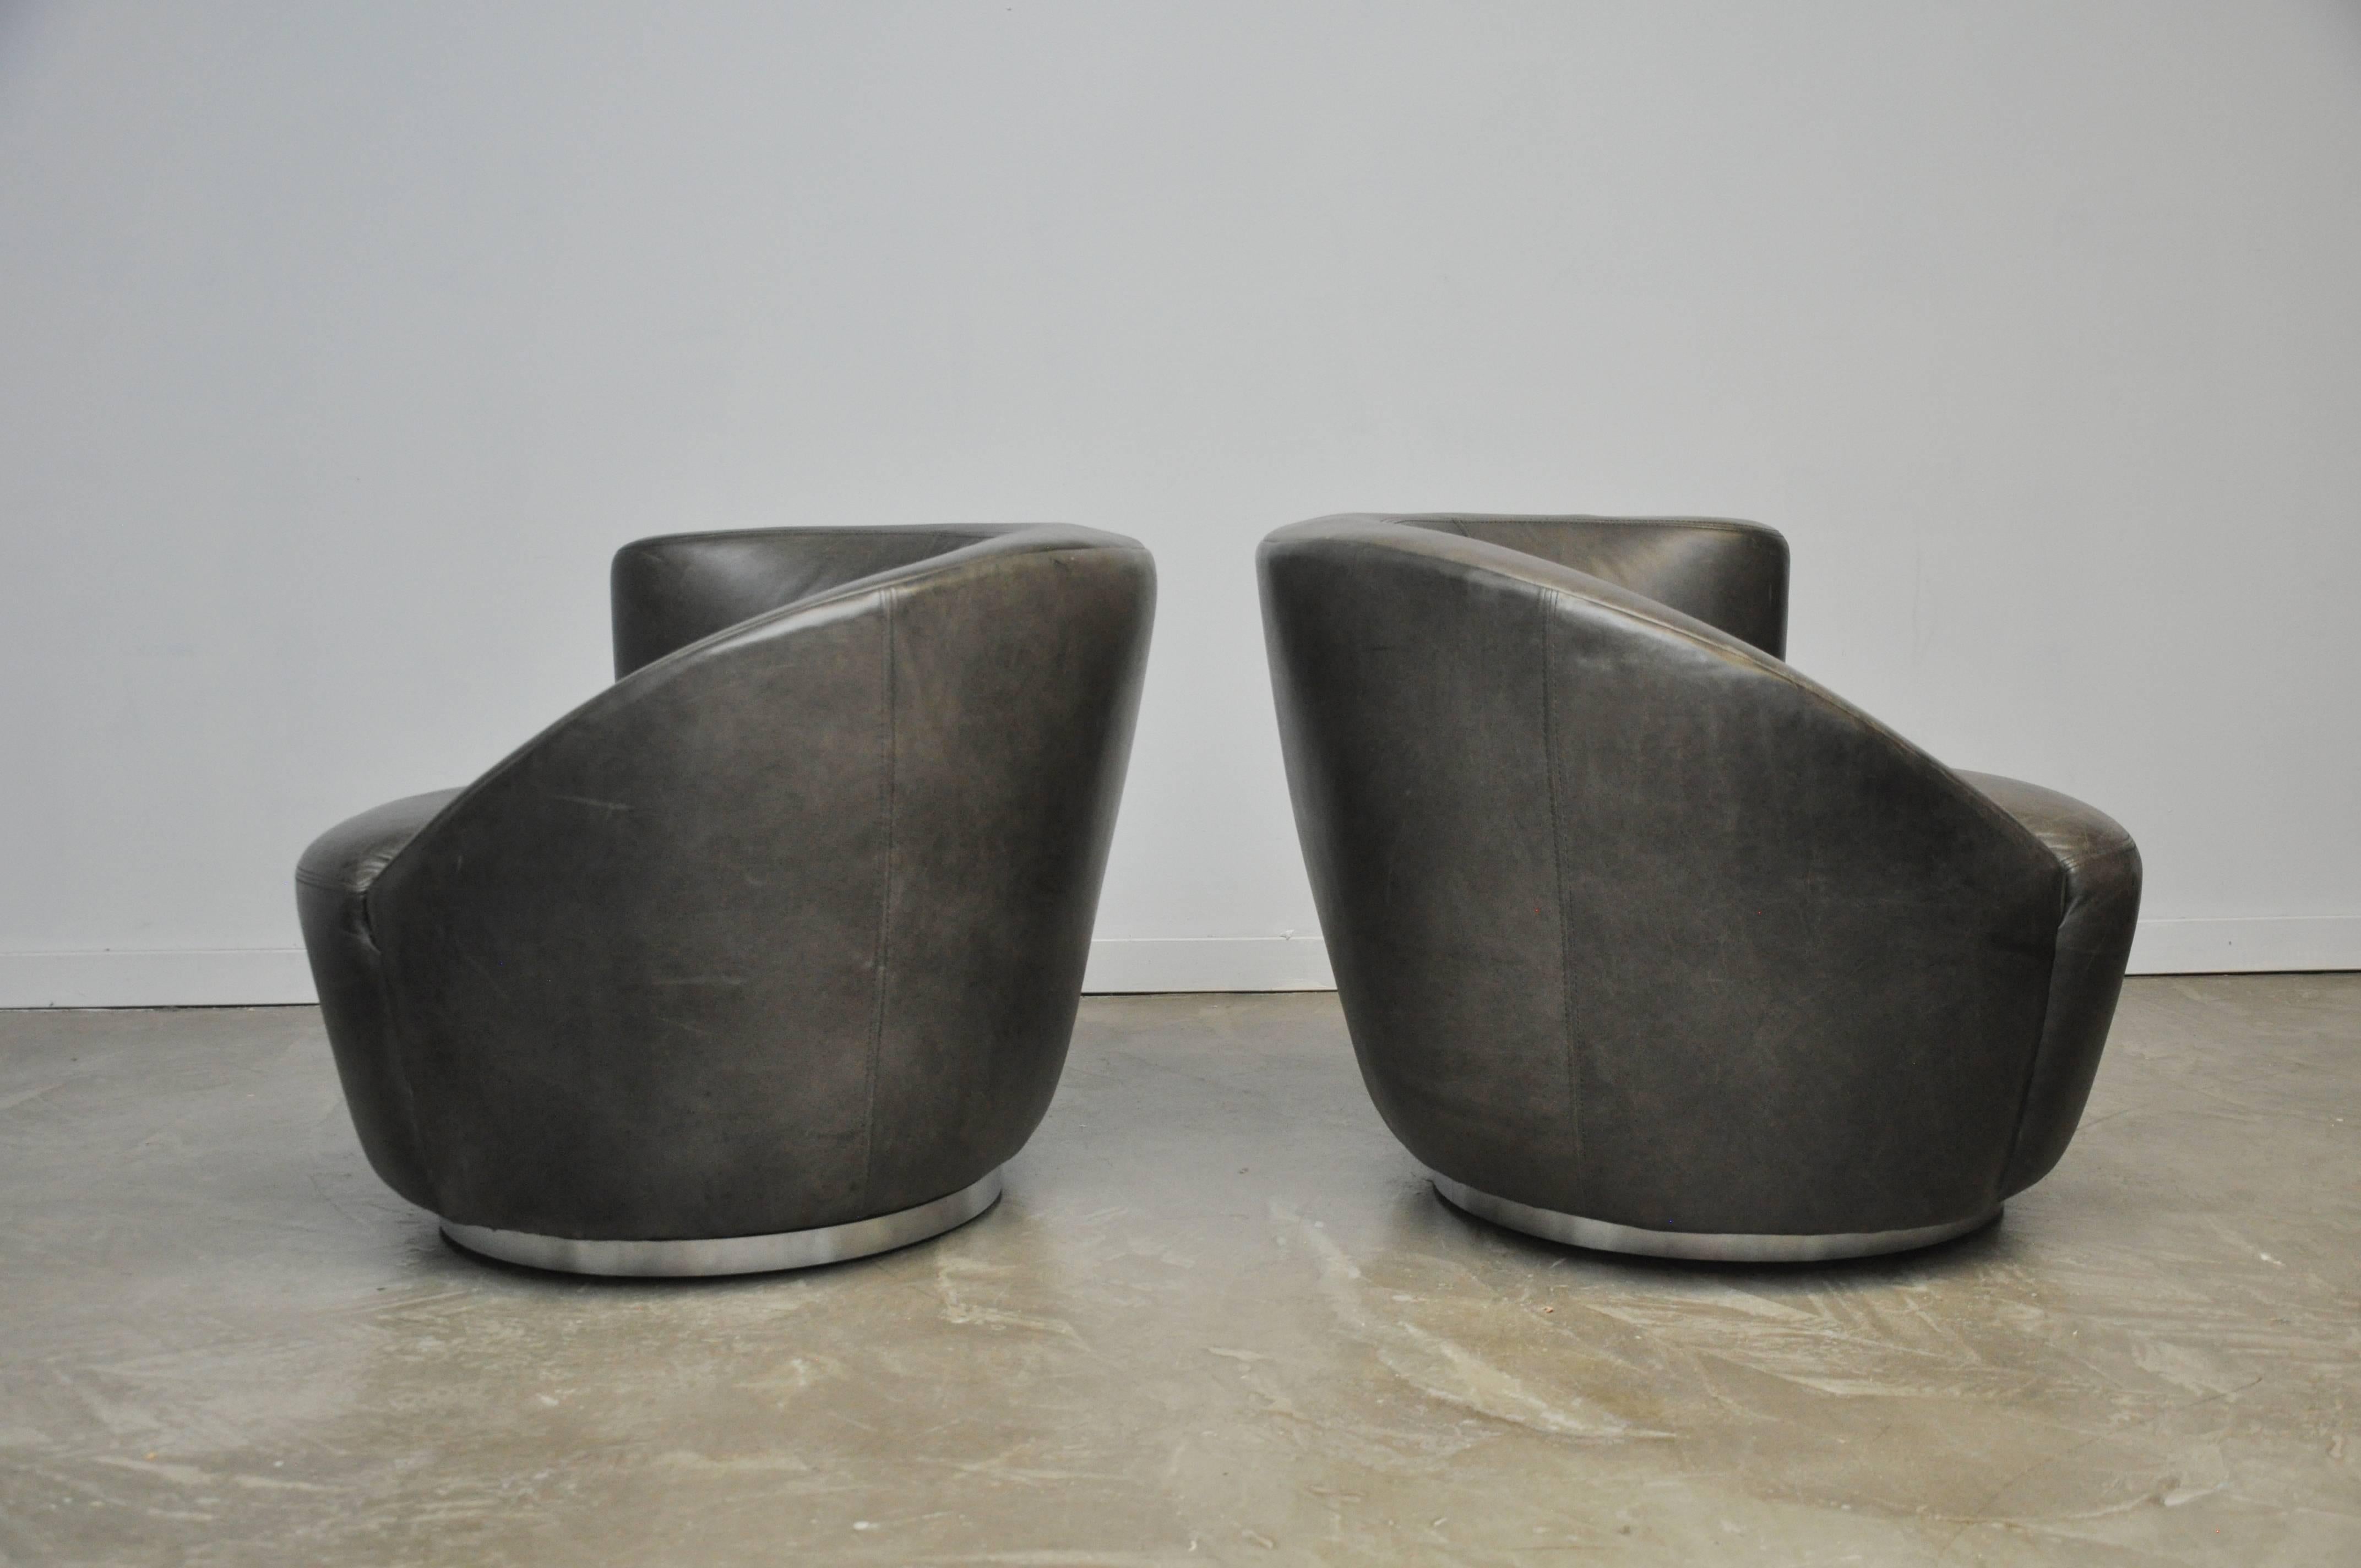 Pair of Vladimir Kagan Naultilus swivel chairs. Original grey leather with beautiful patina on chrome bases.